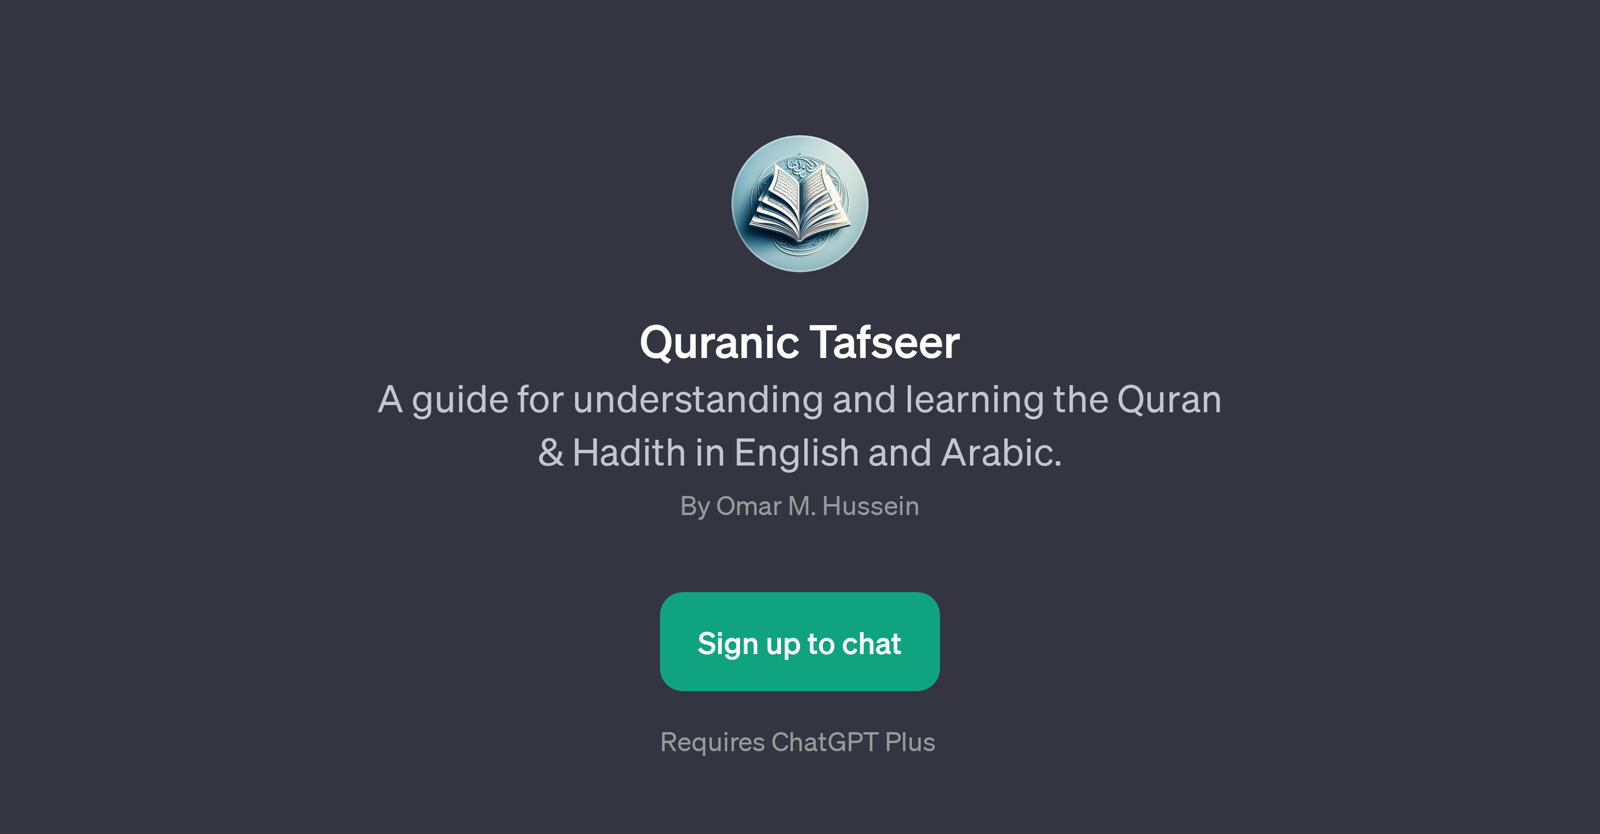 Quranic Tafseer website